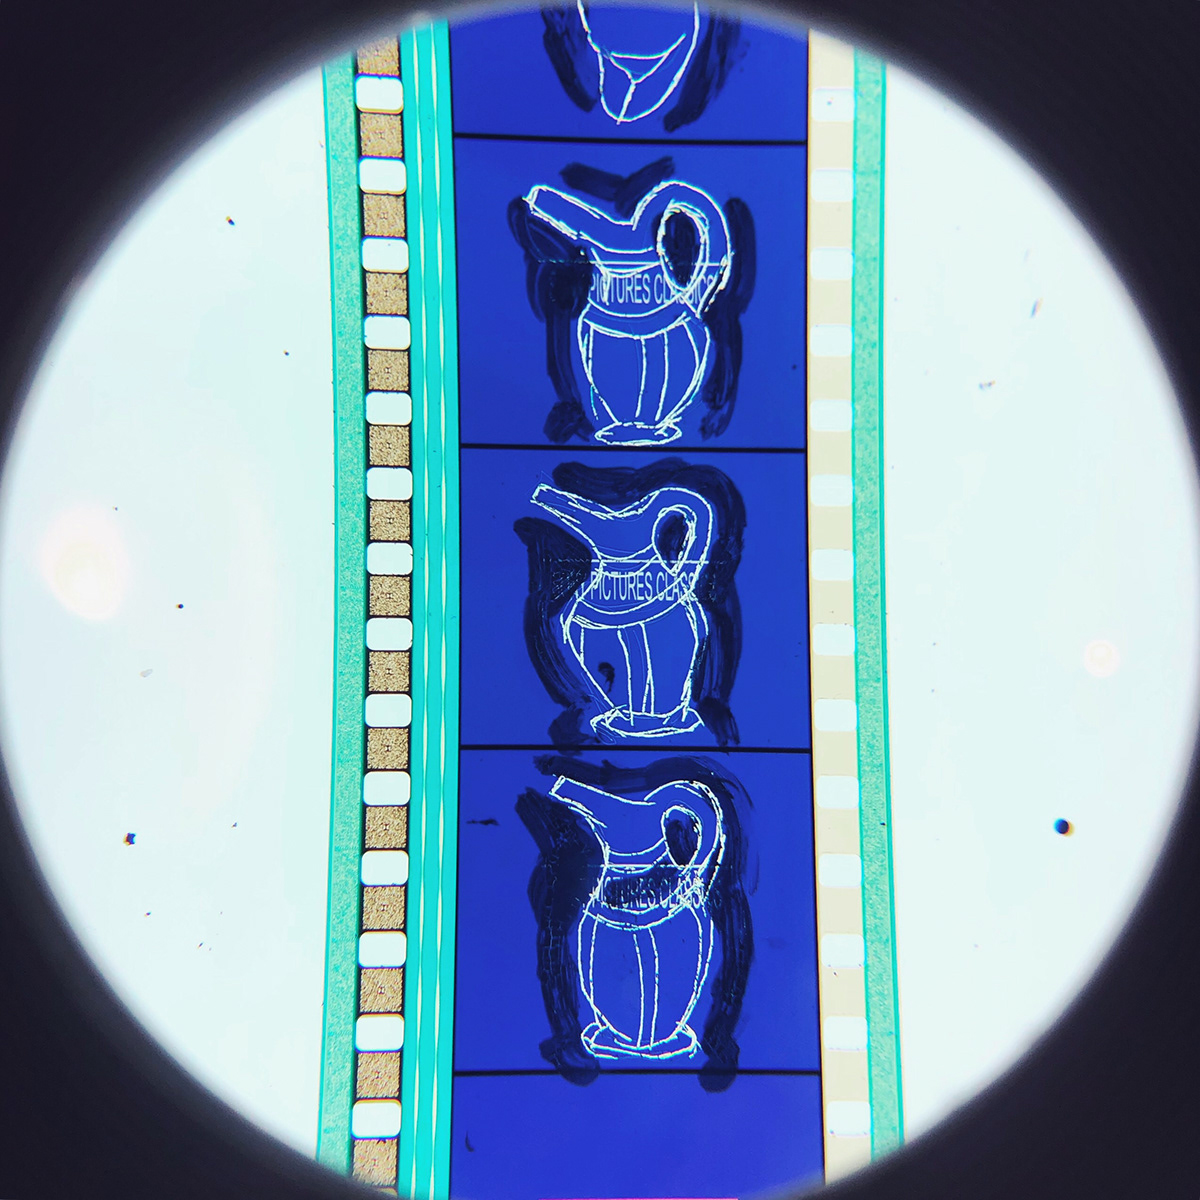 35mm analog archaeology experimental experimental animation short film